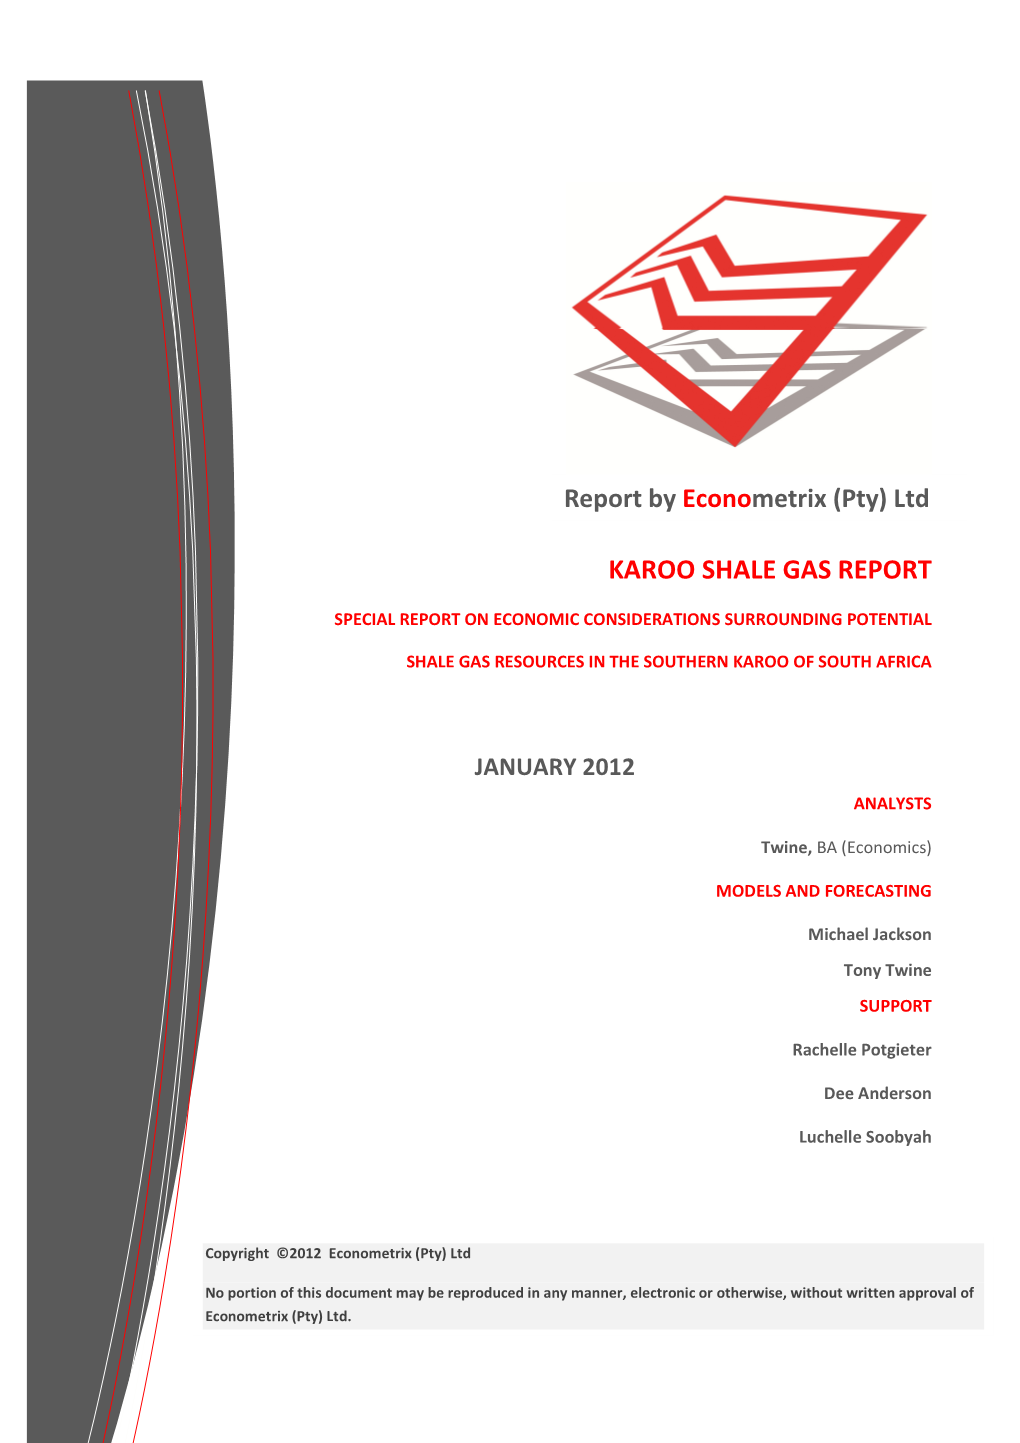 Karoo Shale Gas Report by Econometrix (Pty)